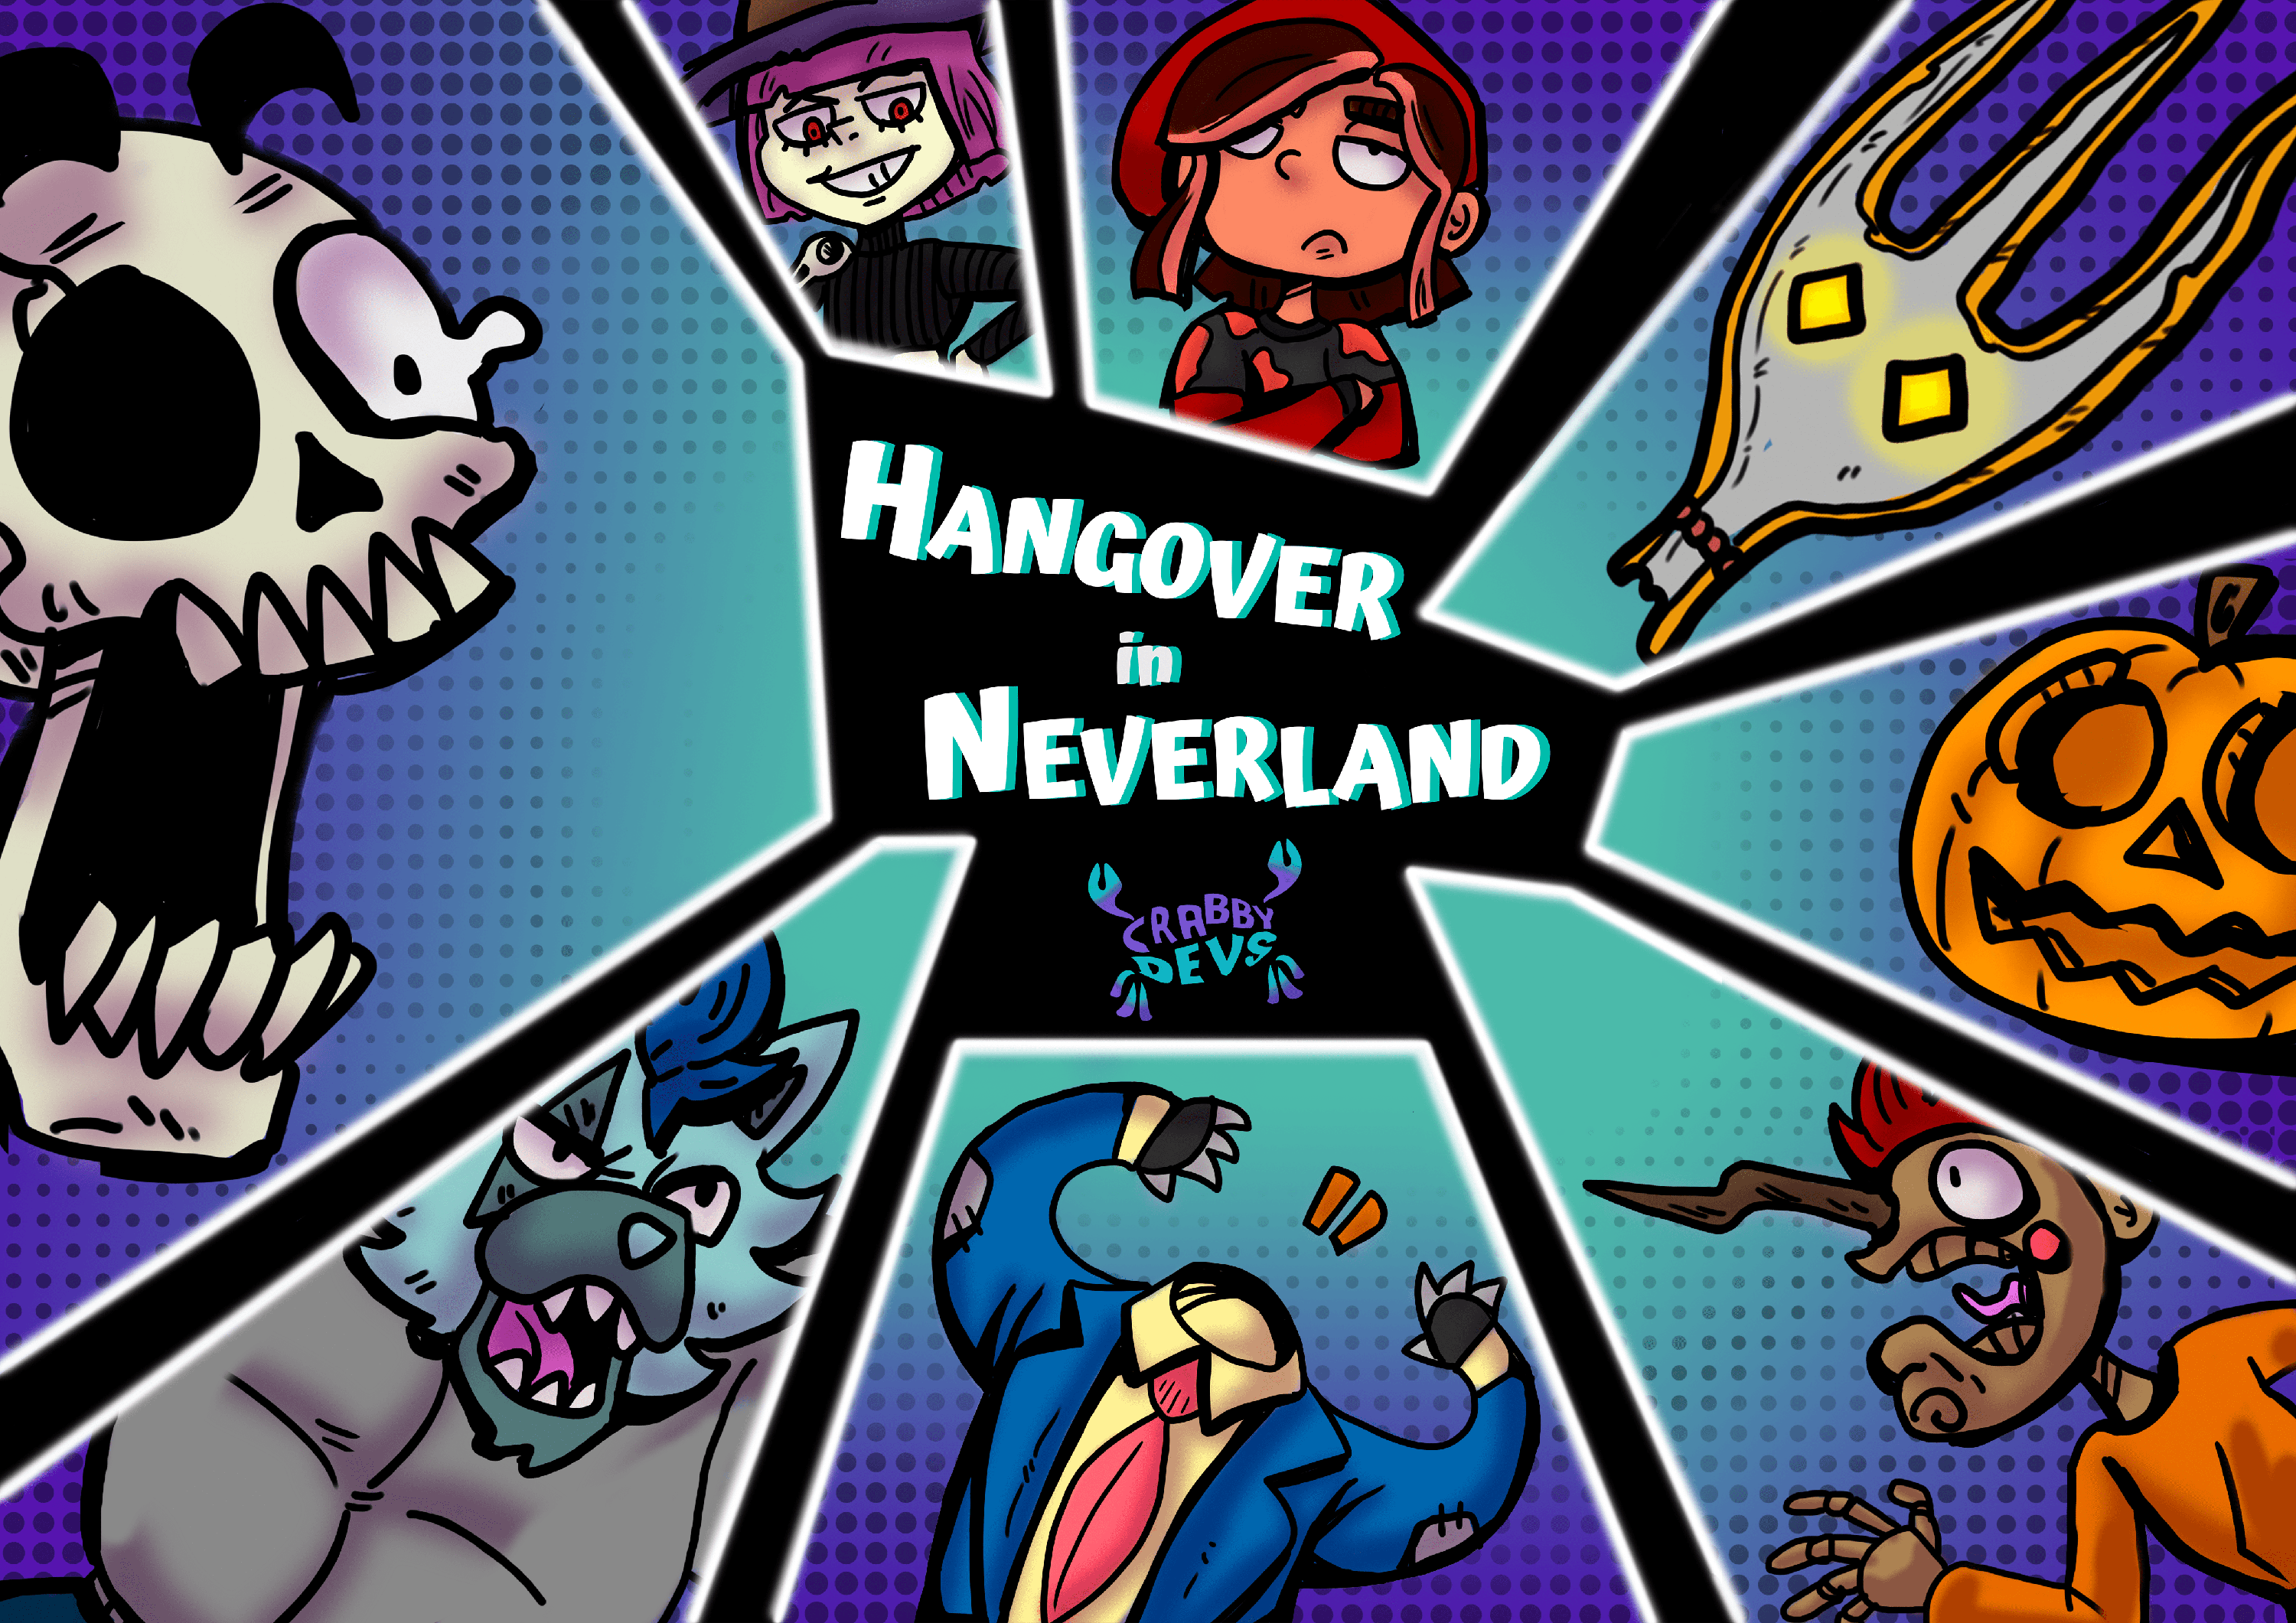 Hangover in Neverland